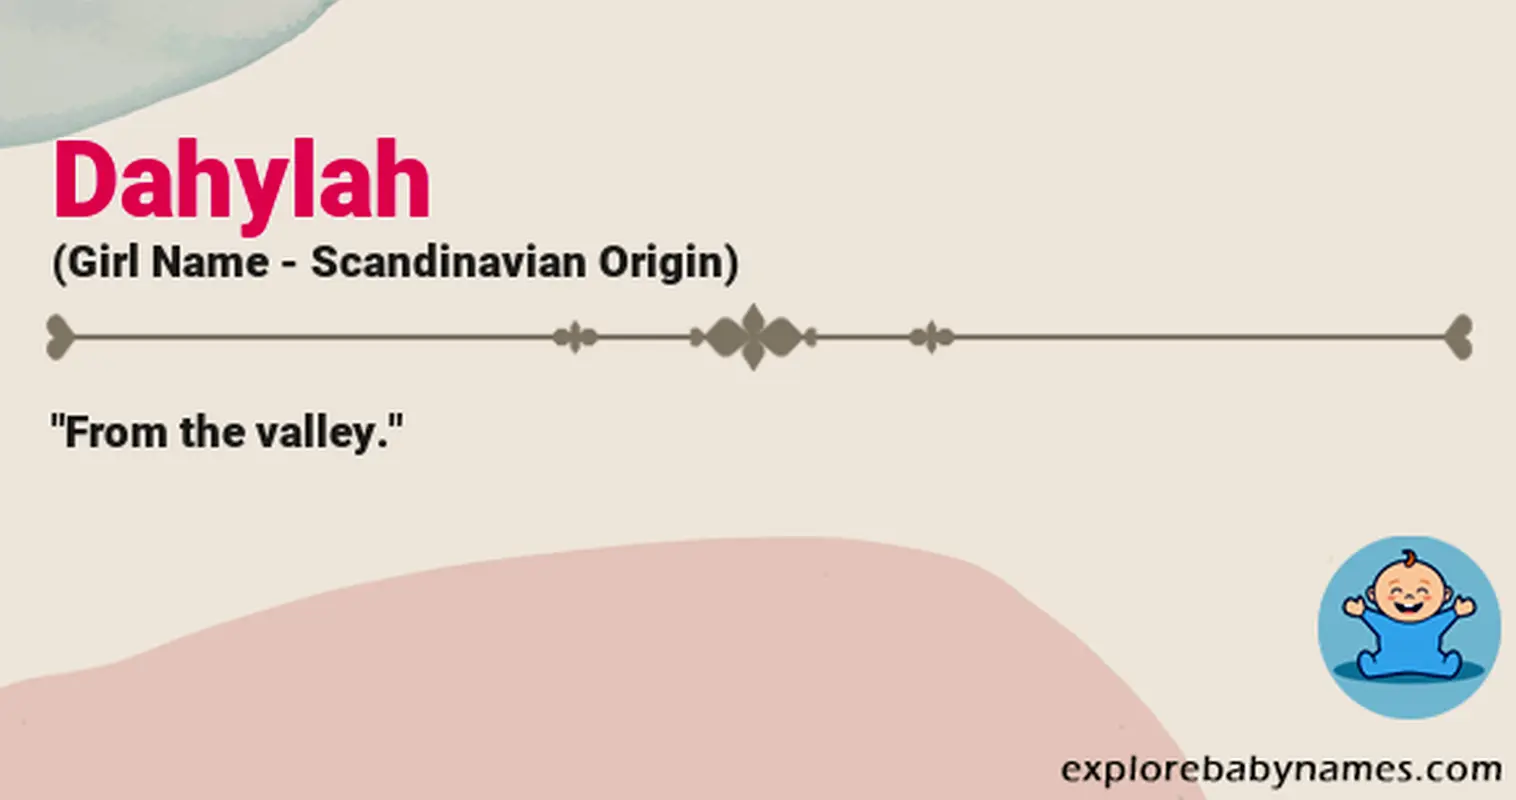 Meaning of Dahylah